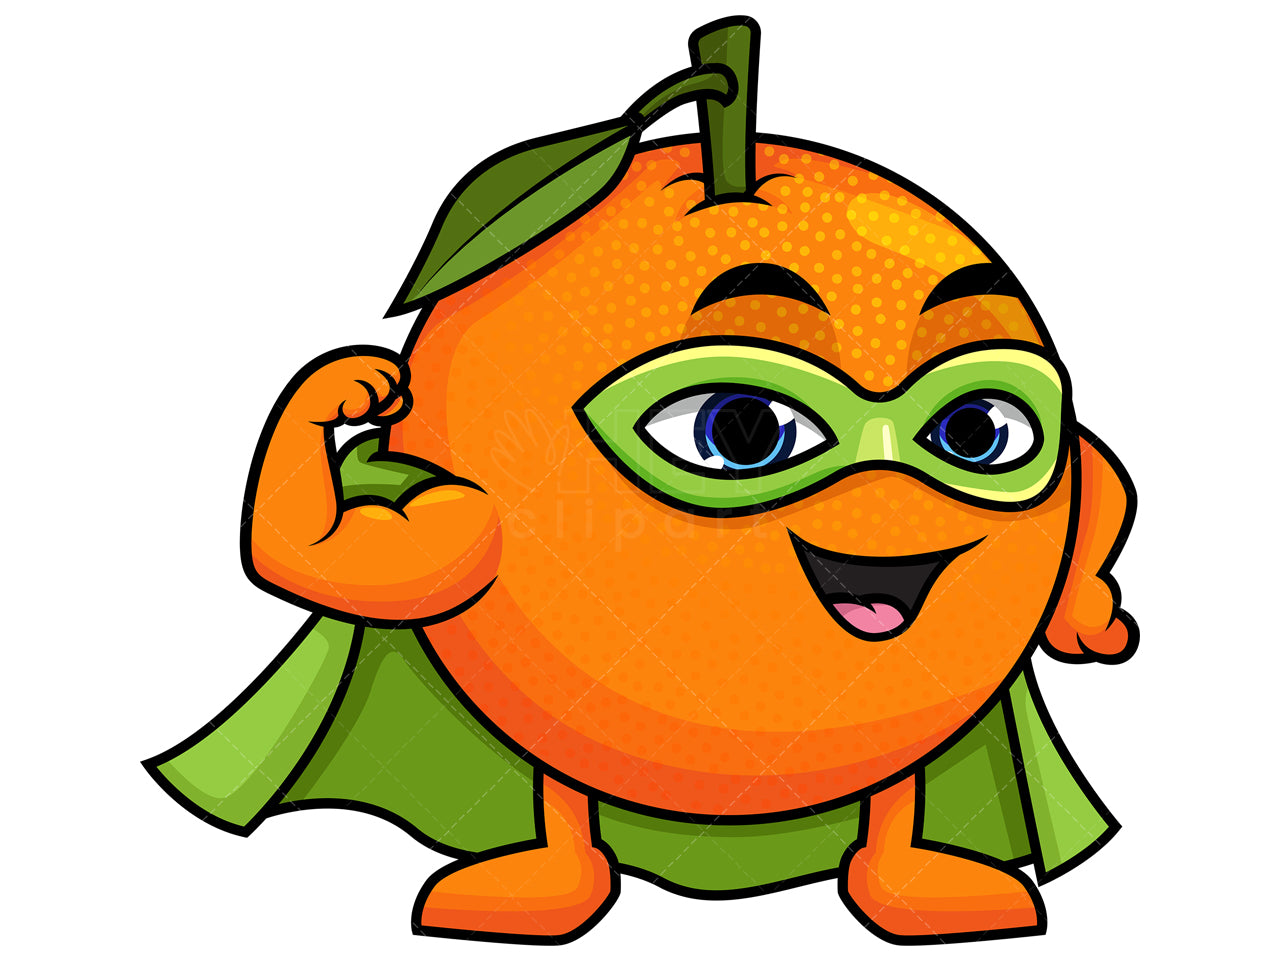 Royalty-free stock vector illustration of an orange superhero.